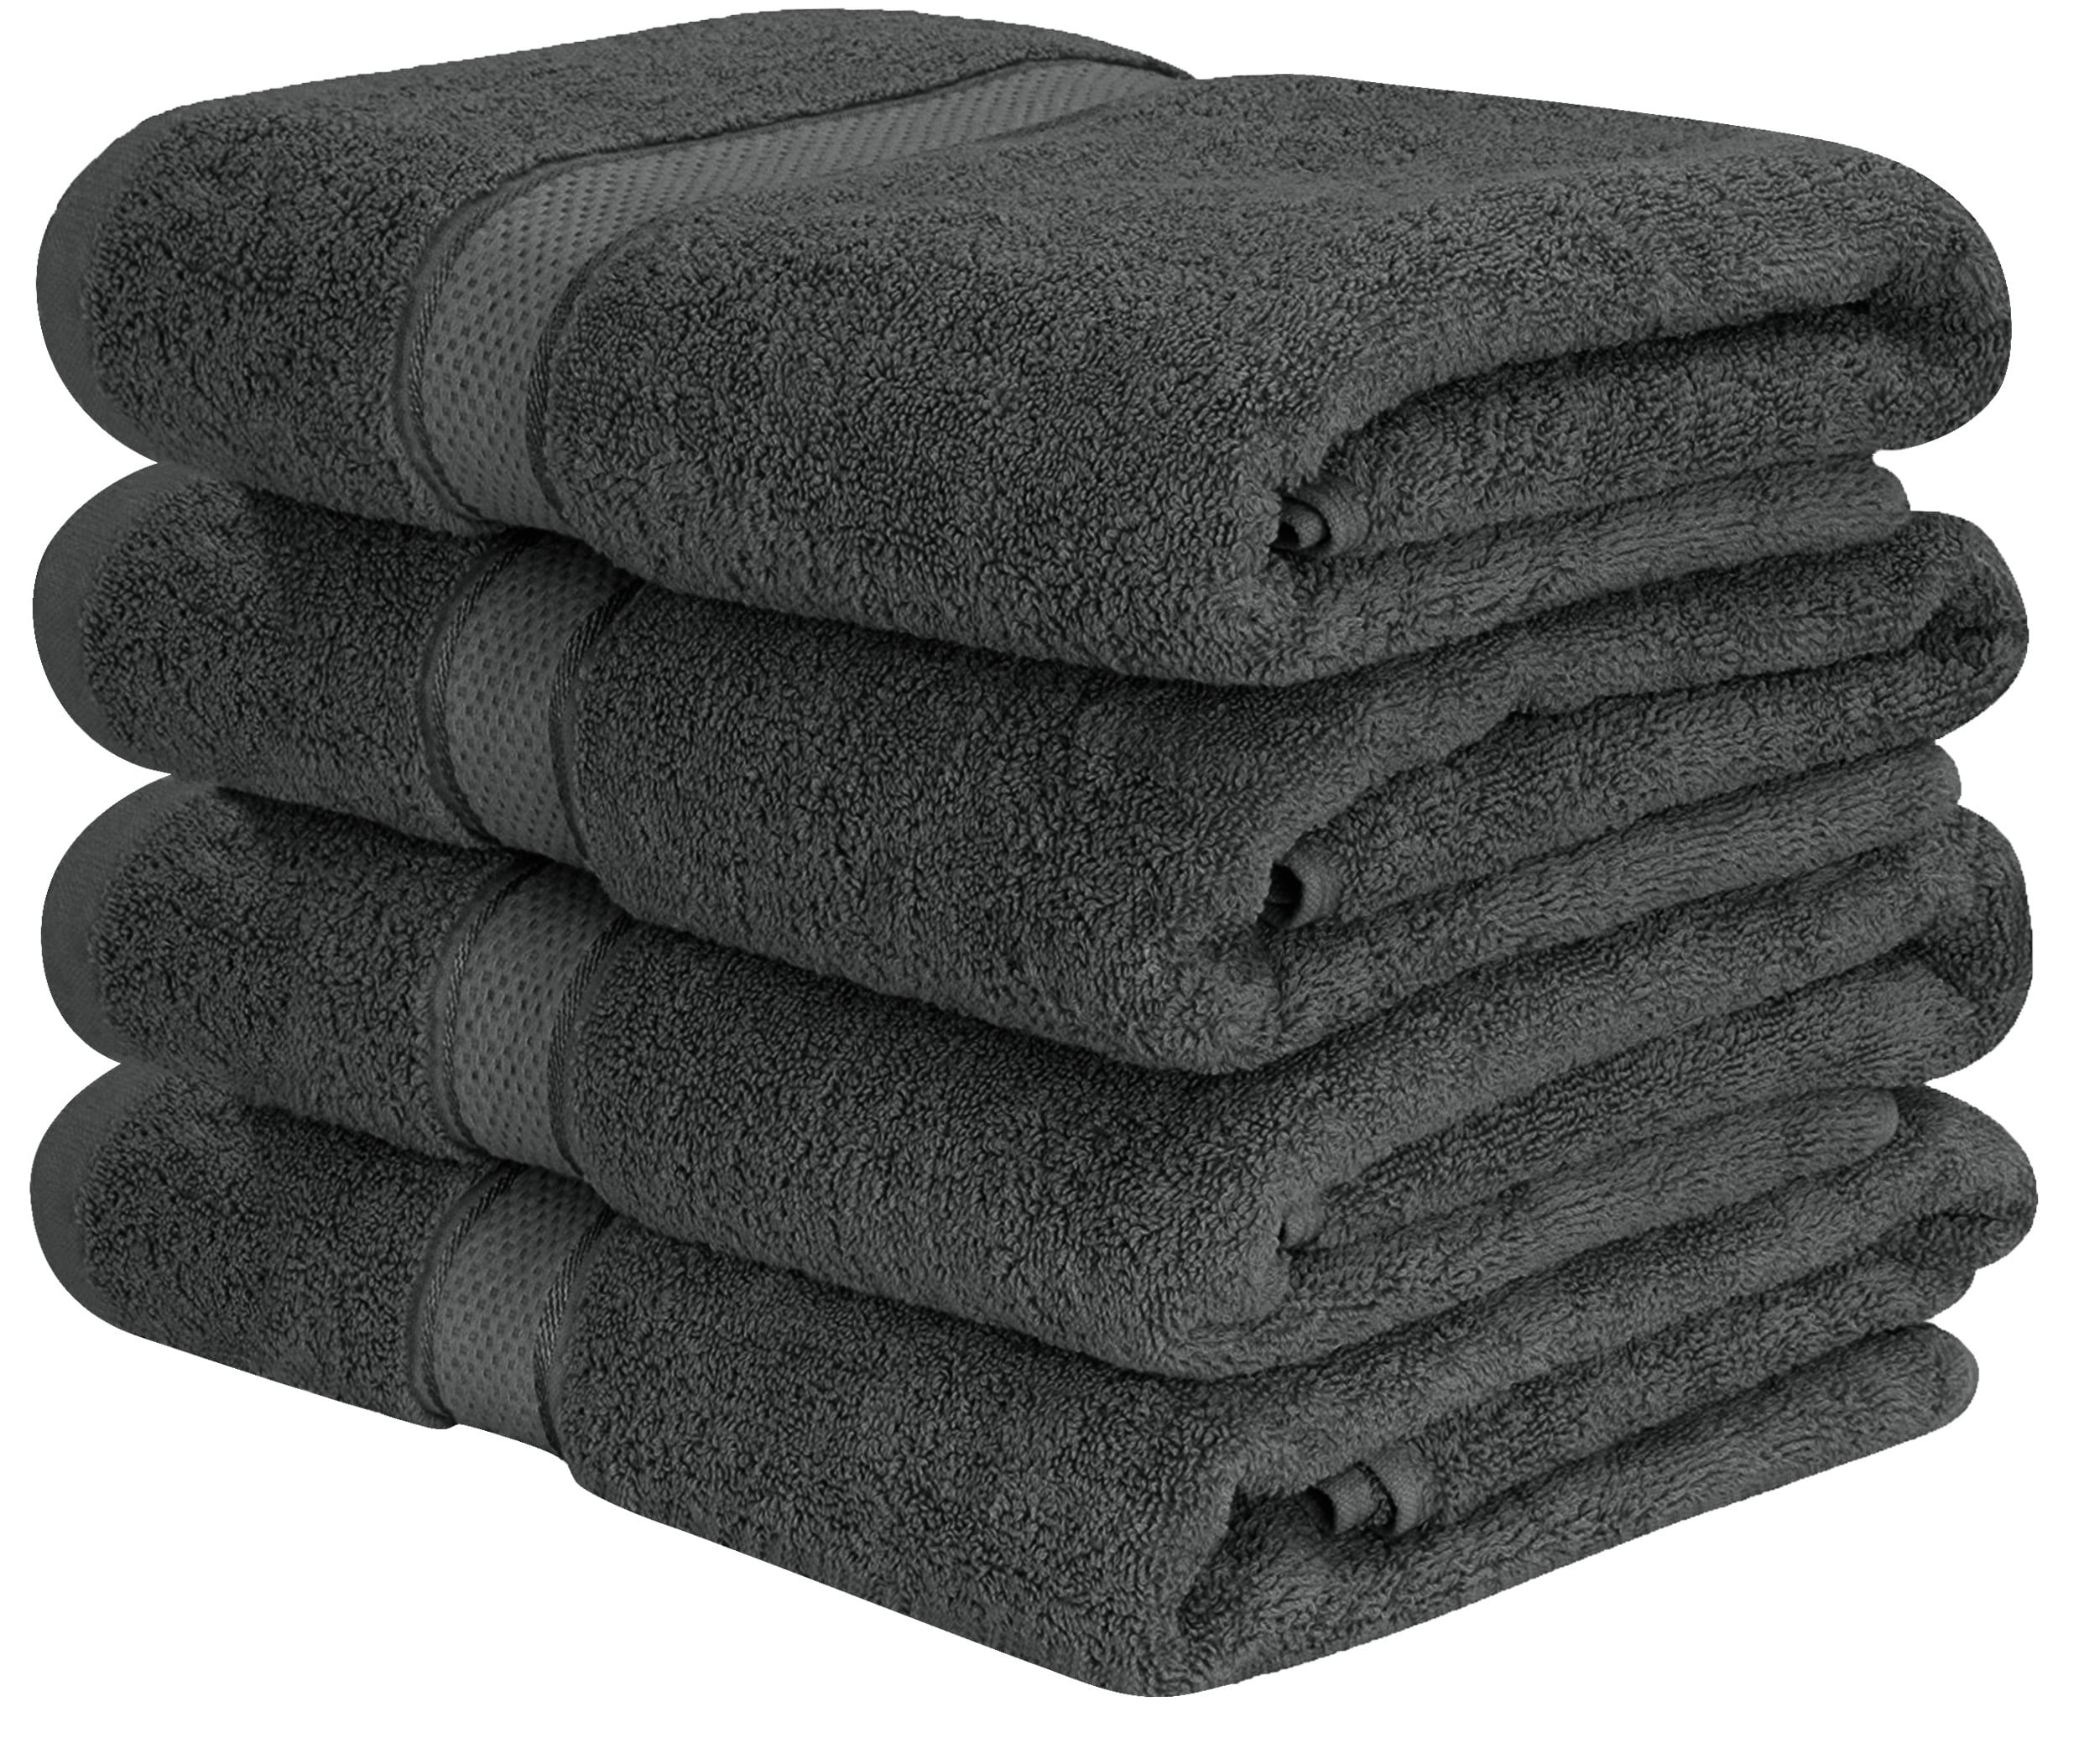 Bath Towels 4 Pack Towel Set 27 x 54 Inches Cotton Soft 600 GSM Utopia Towels 